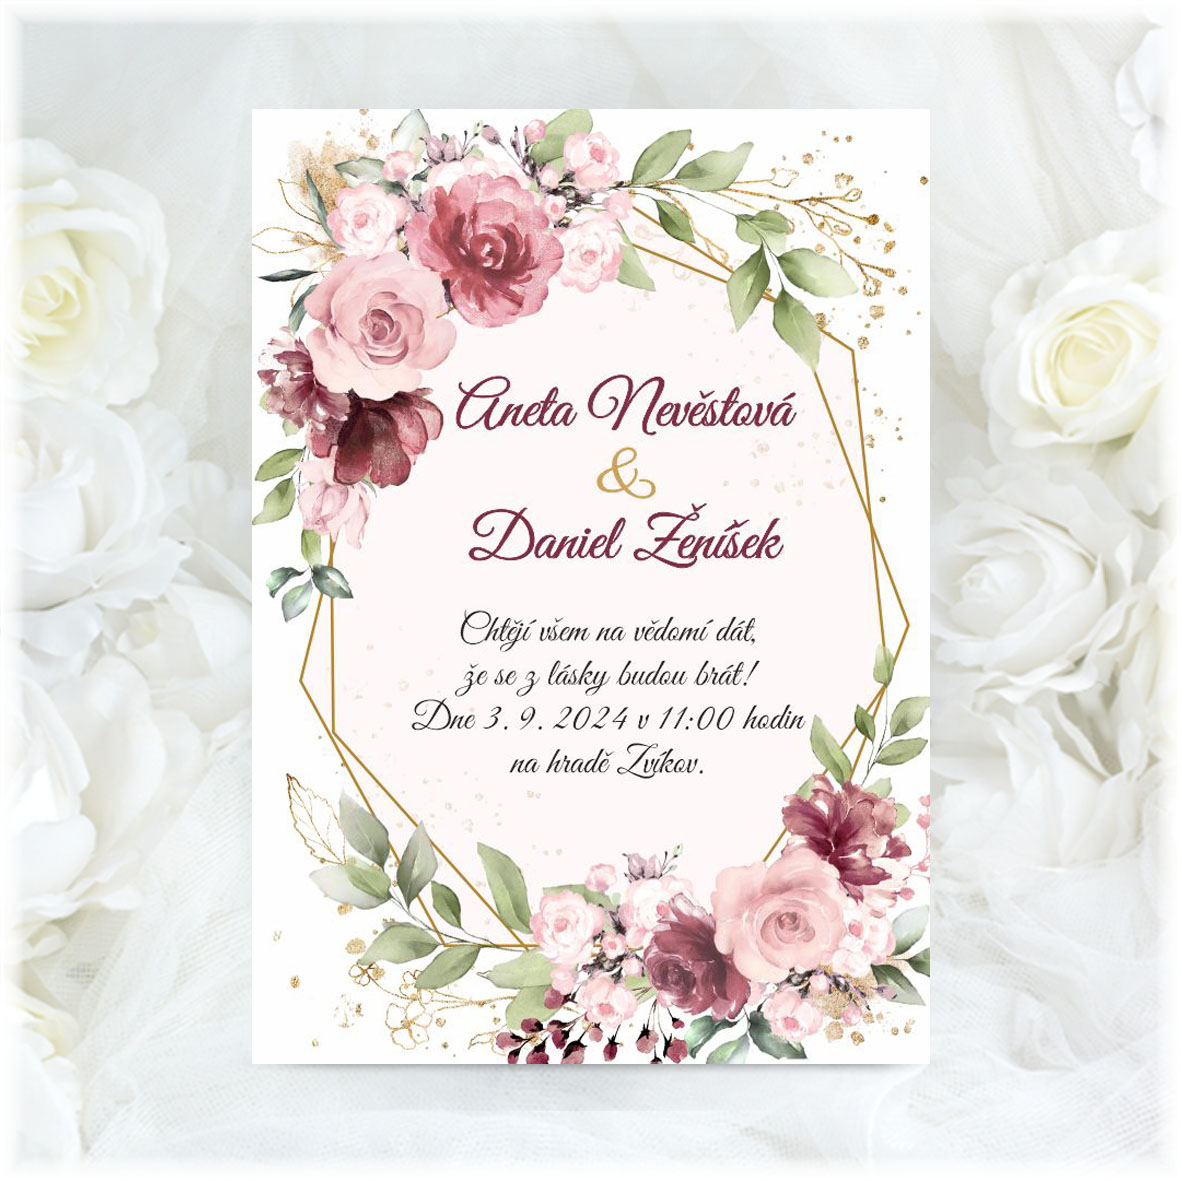 Geometric wedding invitation with flowers